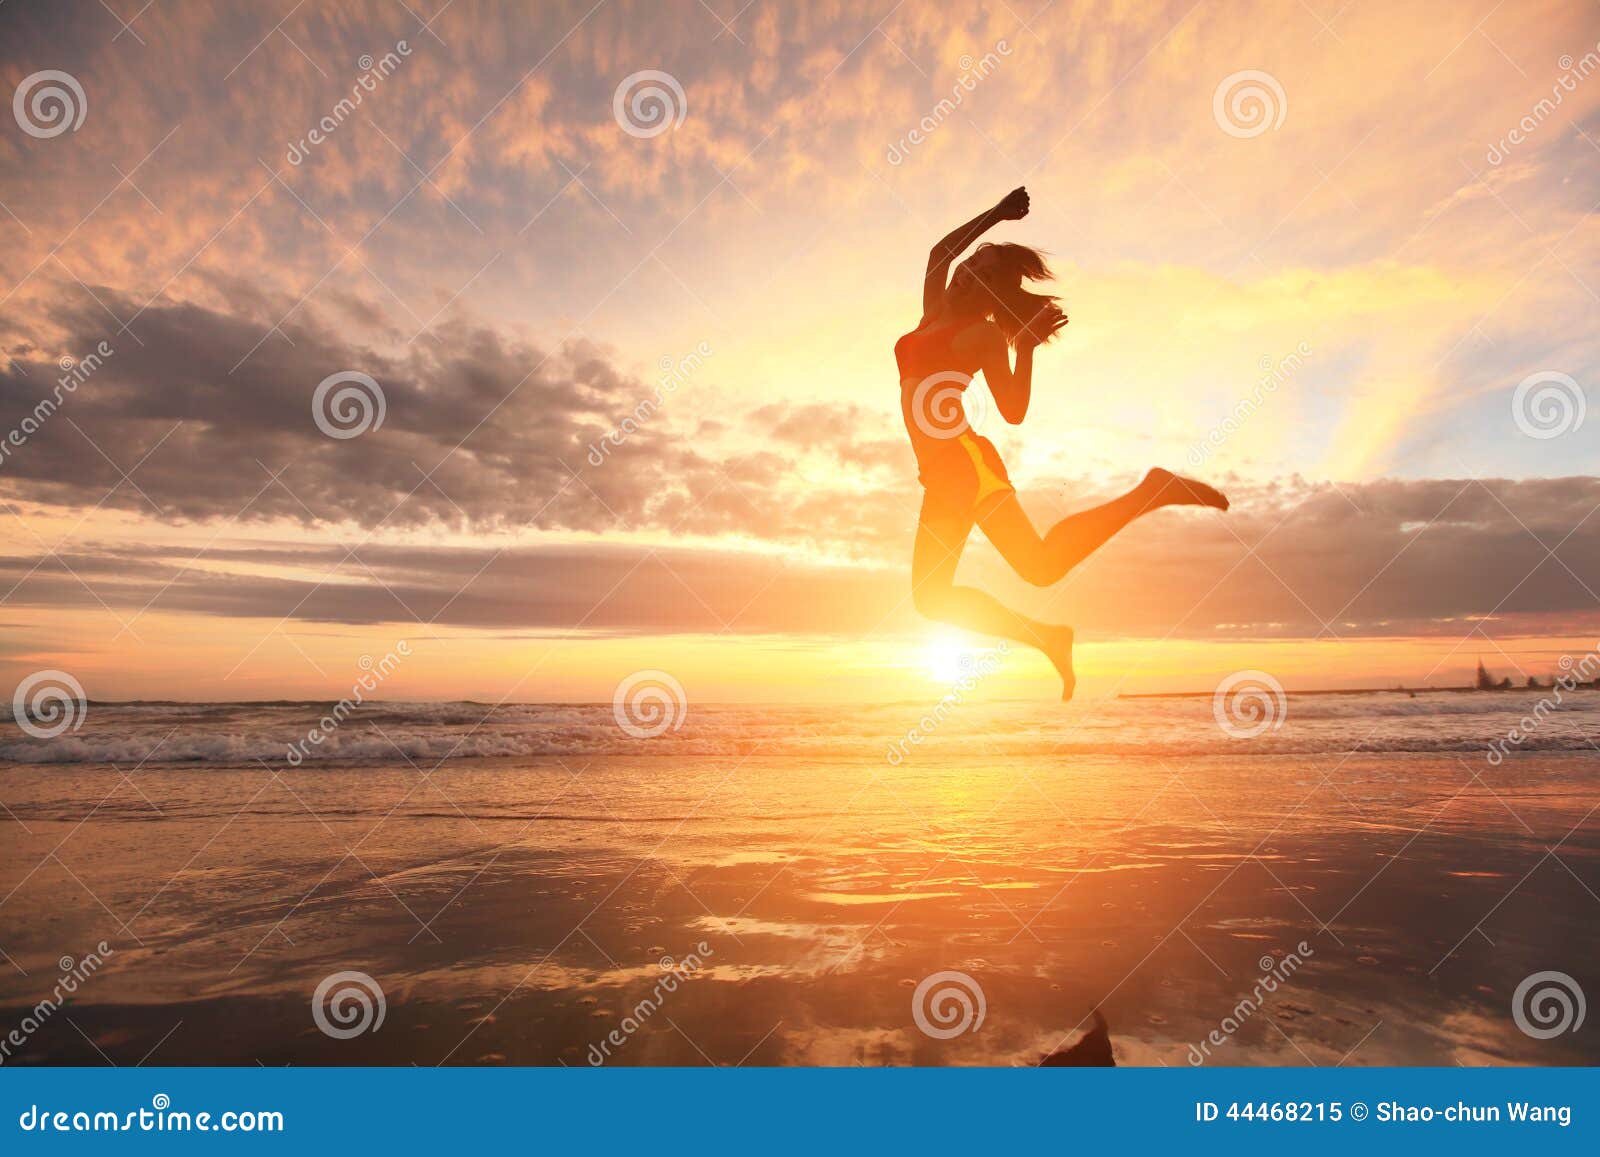 happy jump sport woman